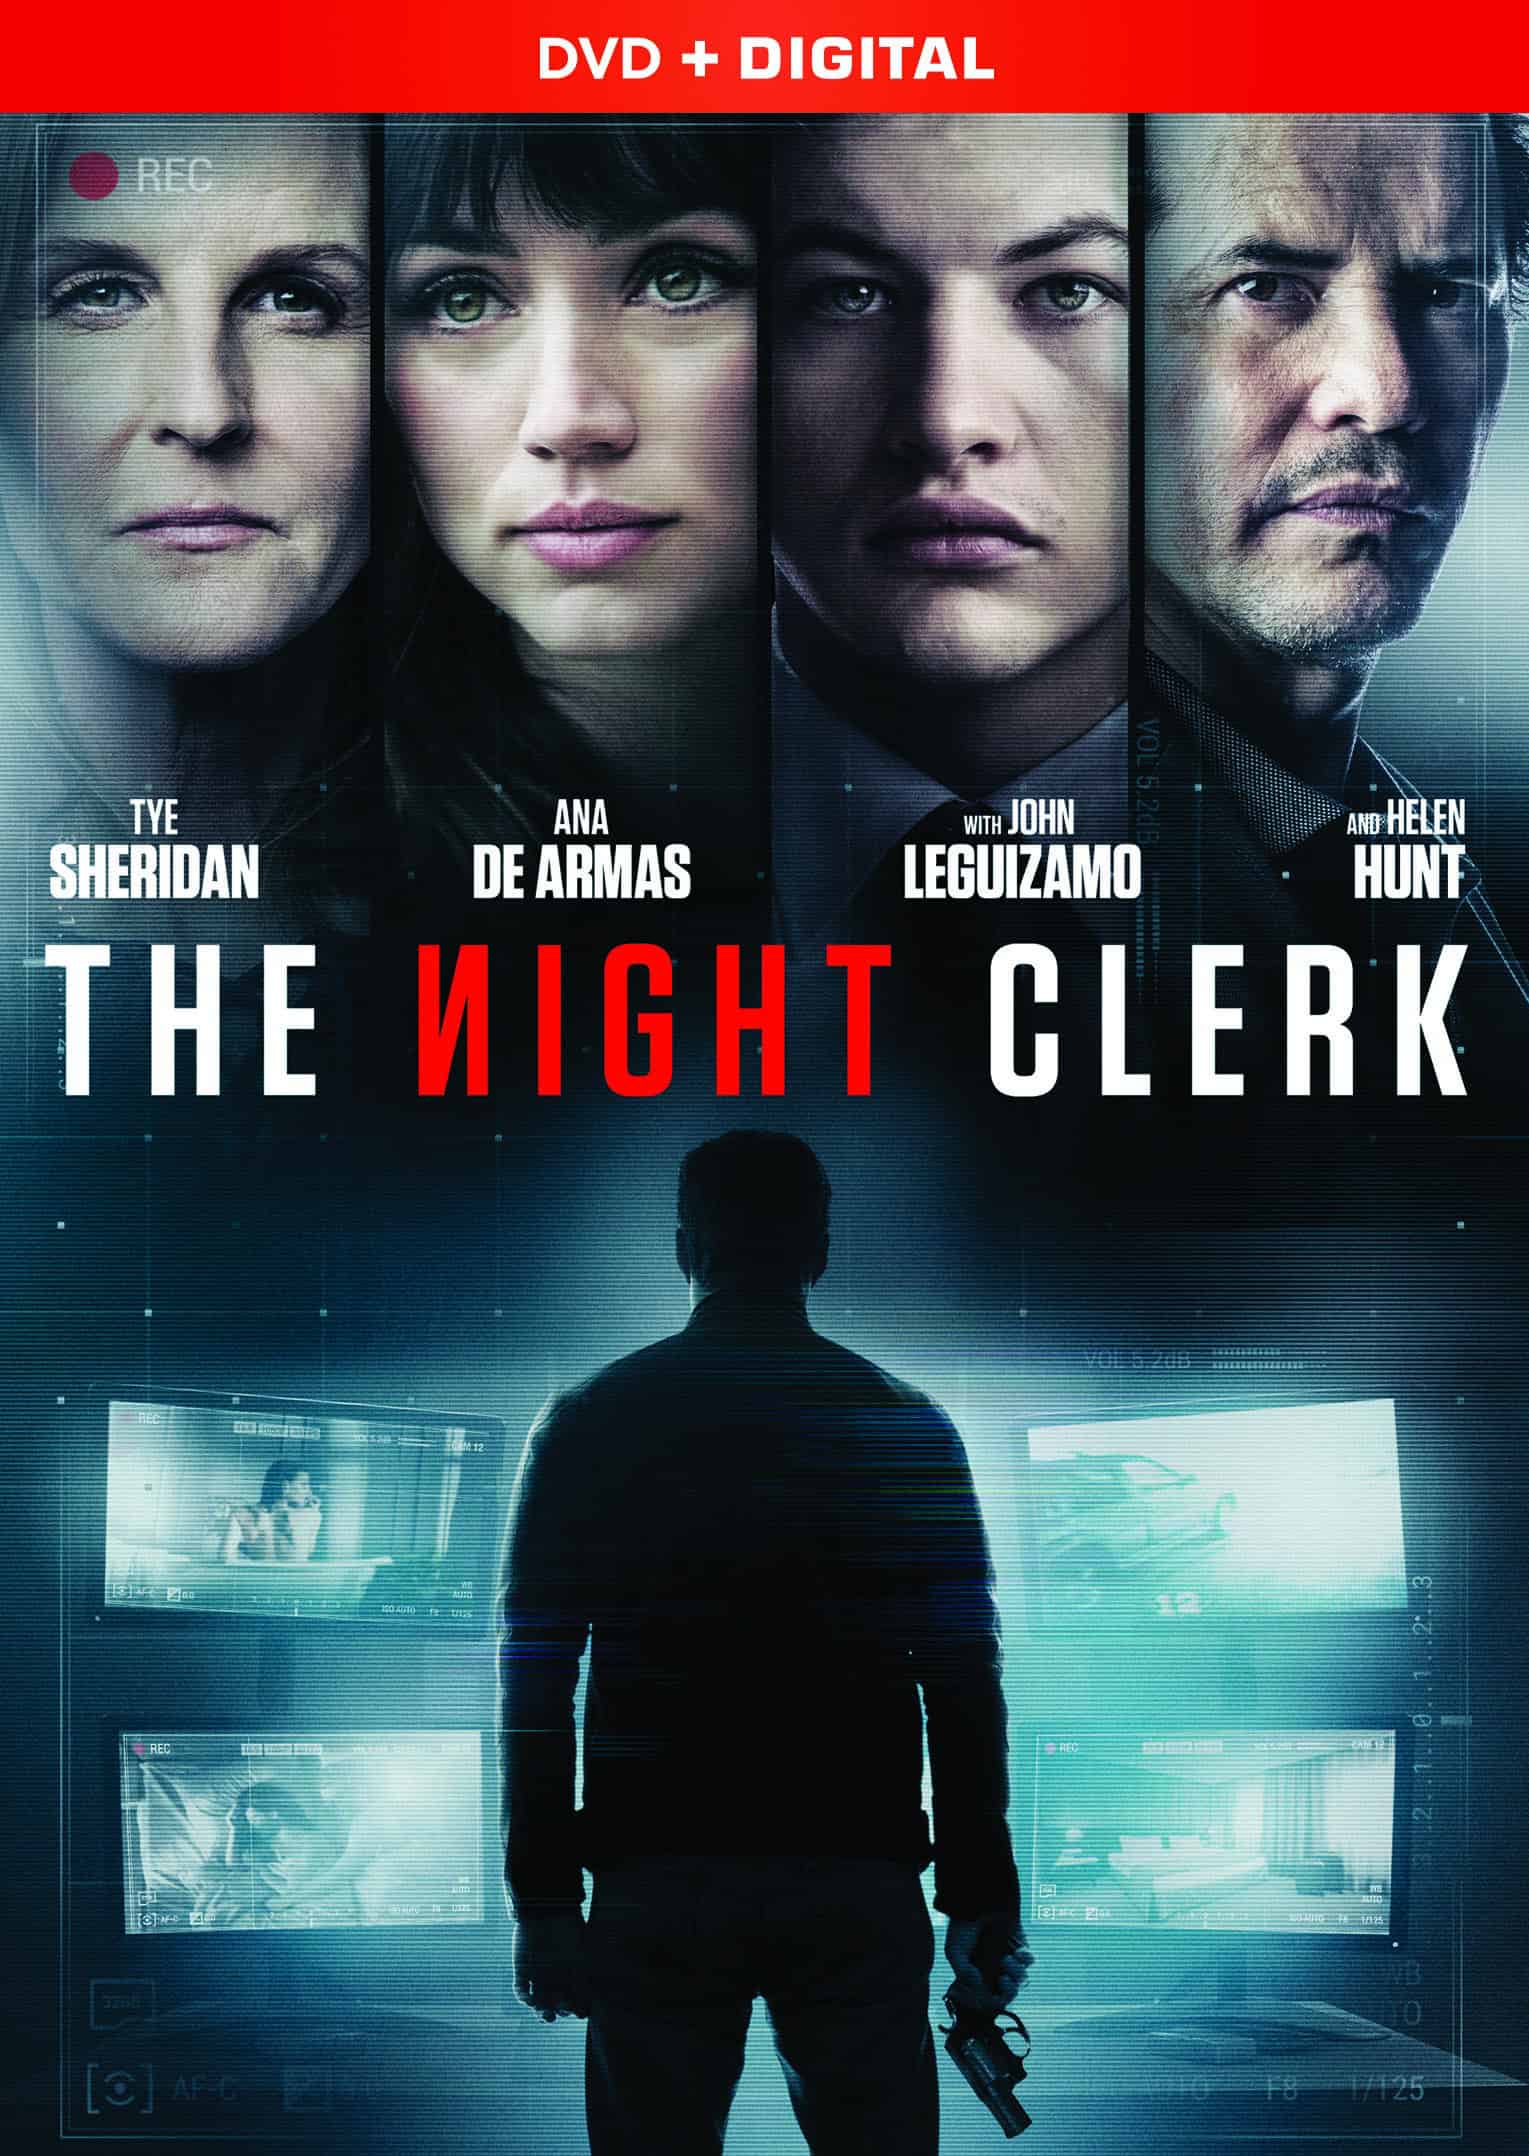 The Night Clerk DVD